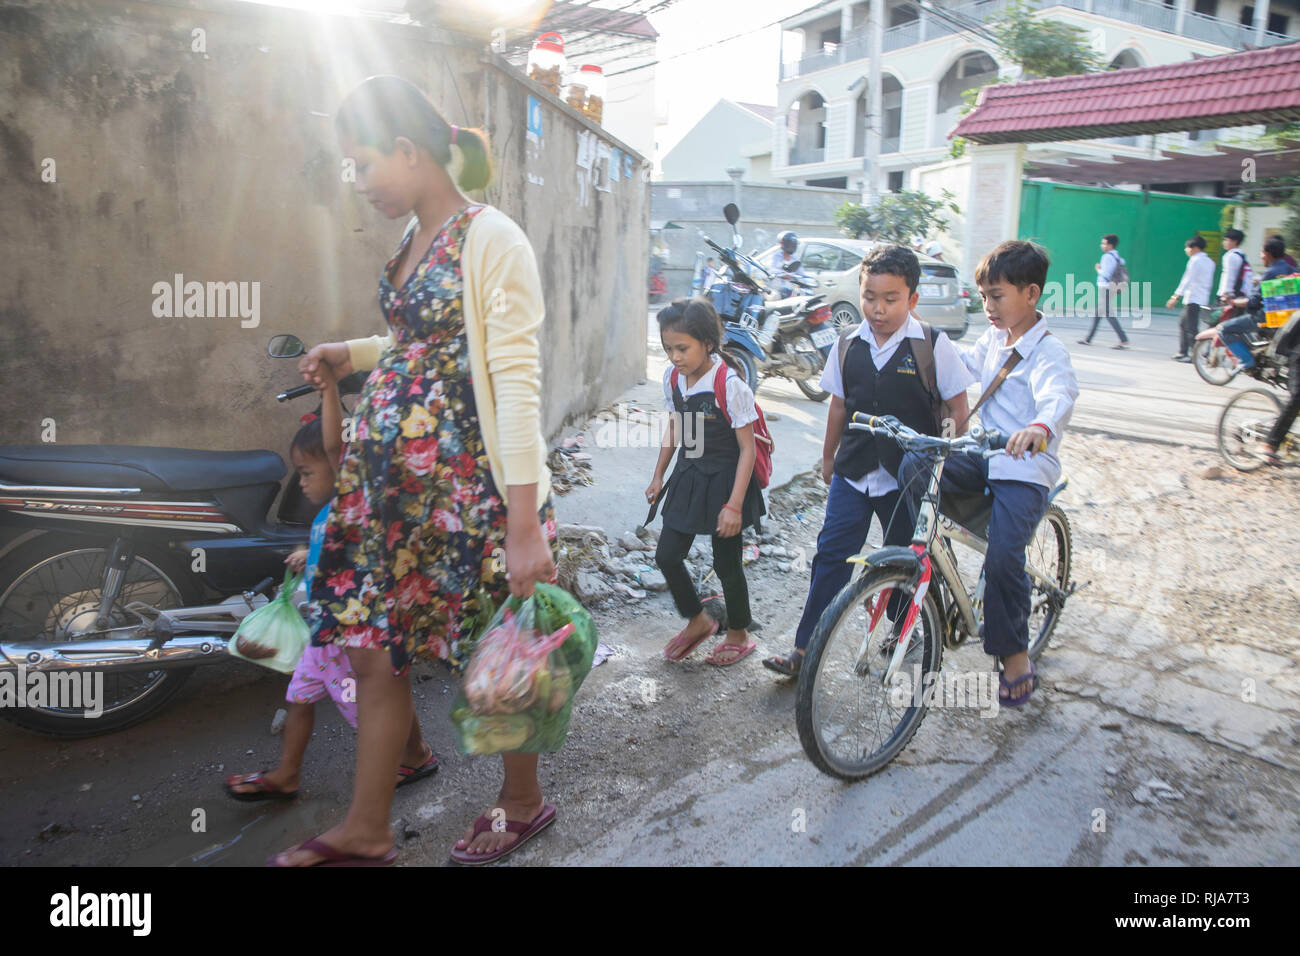 Kambodscha, Phnom Penh, Straßenszene, Kinder auf dem Schulweg Stock Photo